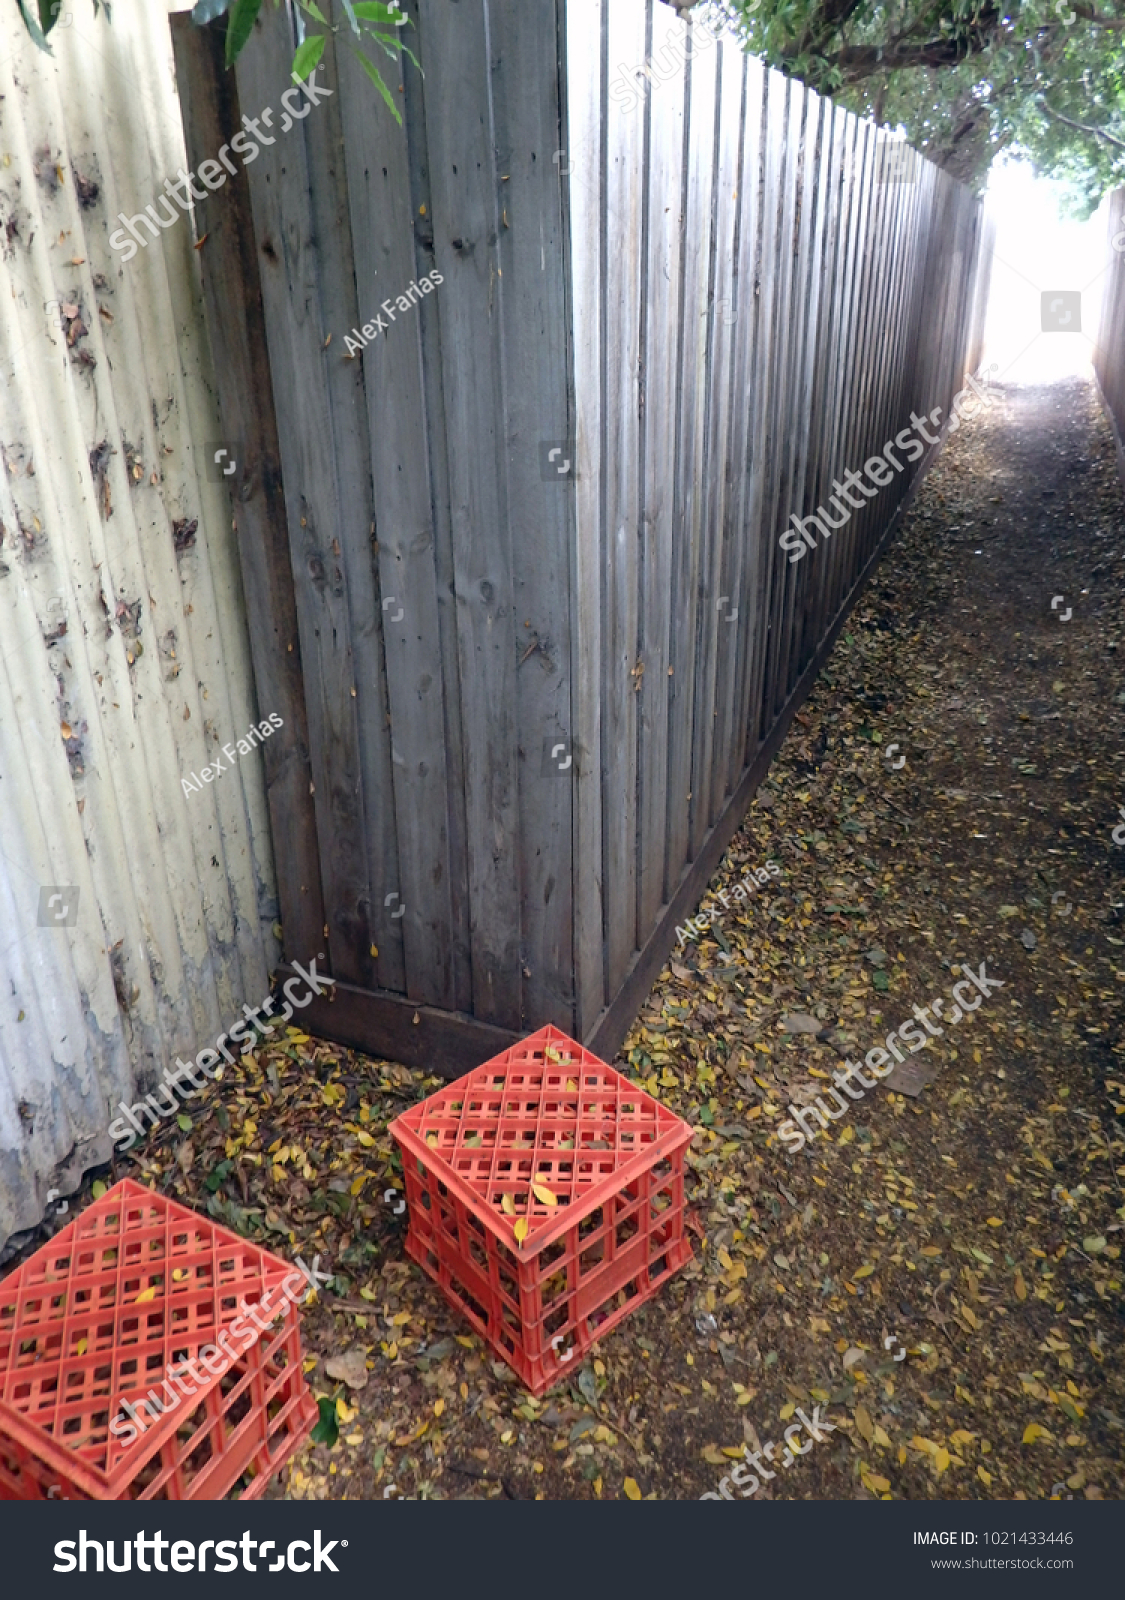 Download 2 Orange Plastic Milk Crates On Buildings Landmarks Stock Image 1021433446 PSD Mockup Templates